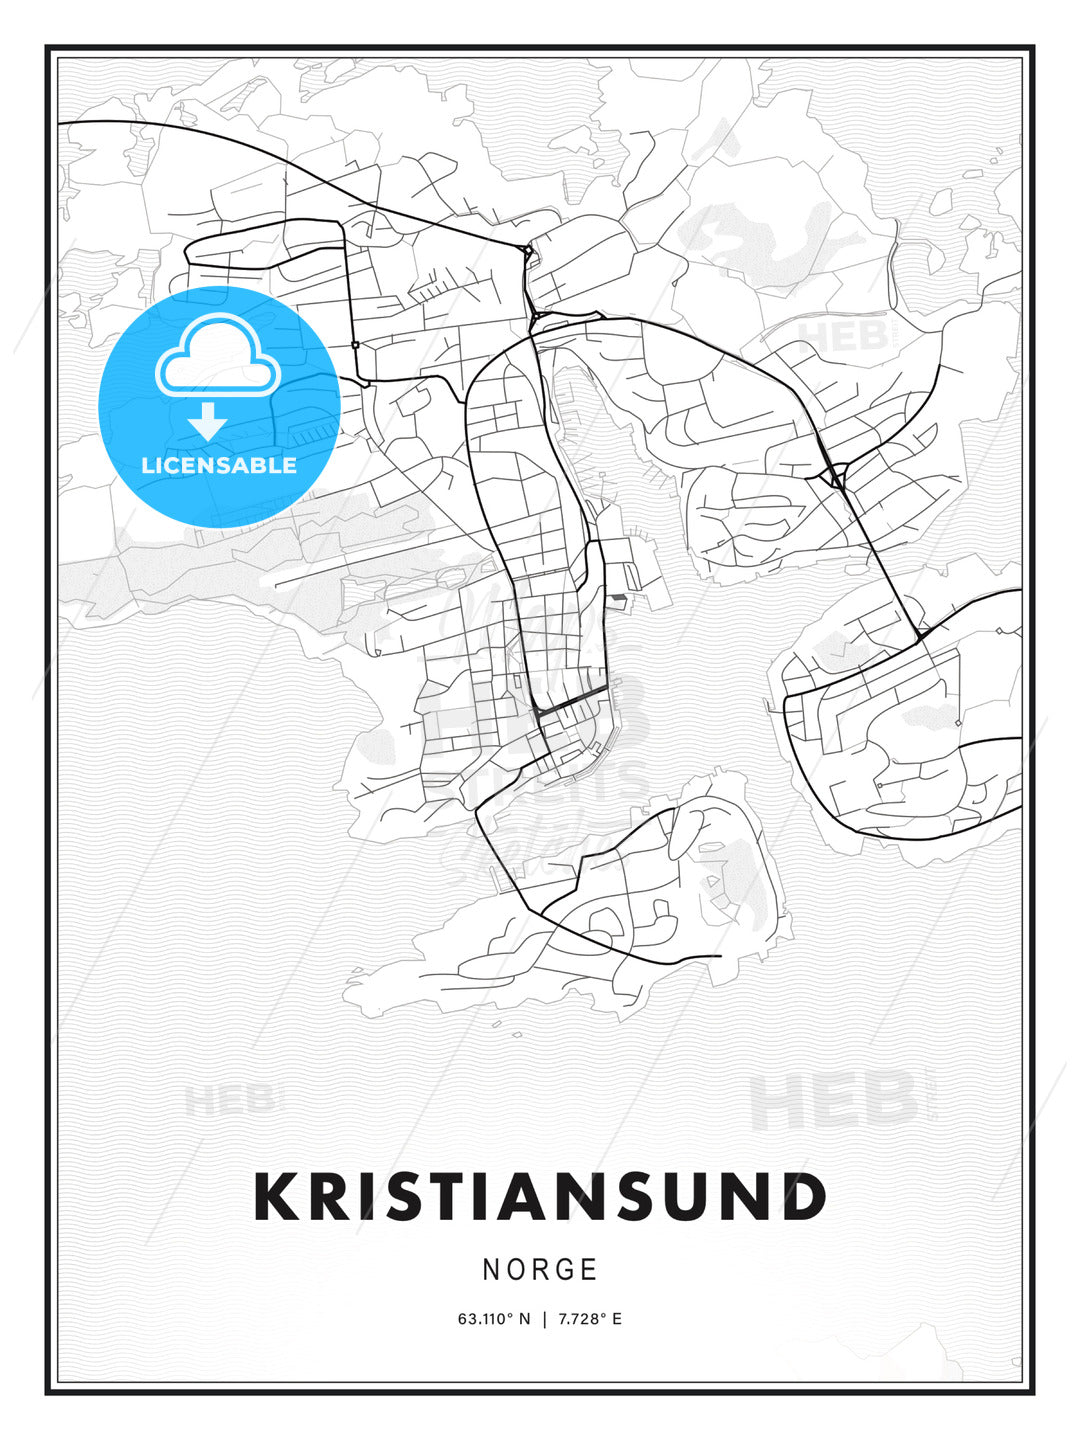 Kristiansund, Norway, Modern Print Template in Various Formats - HEBSTREITS Sketches